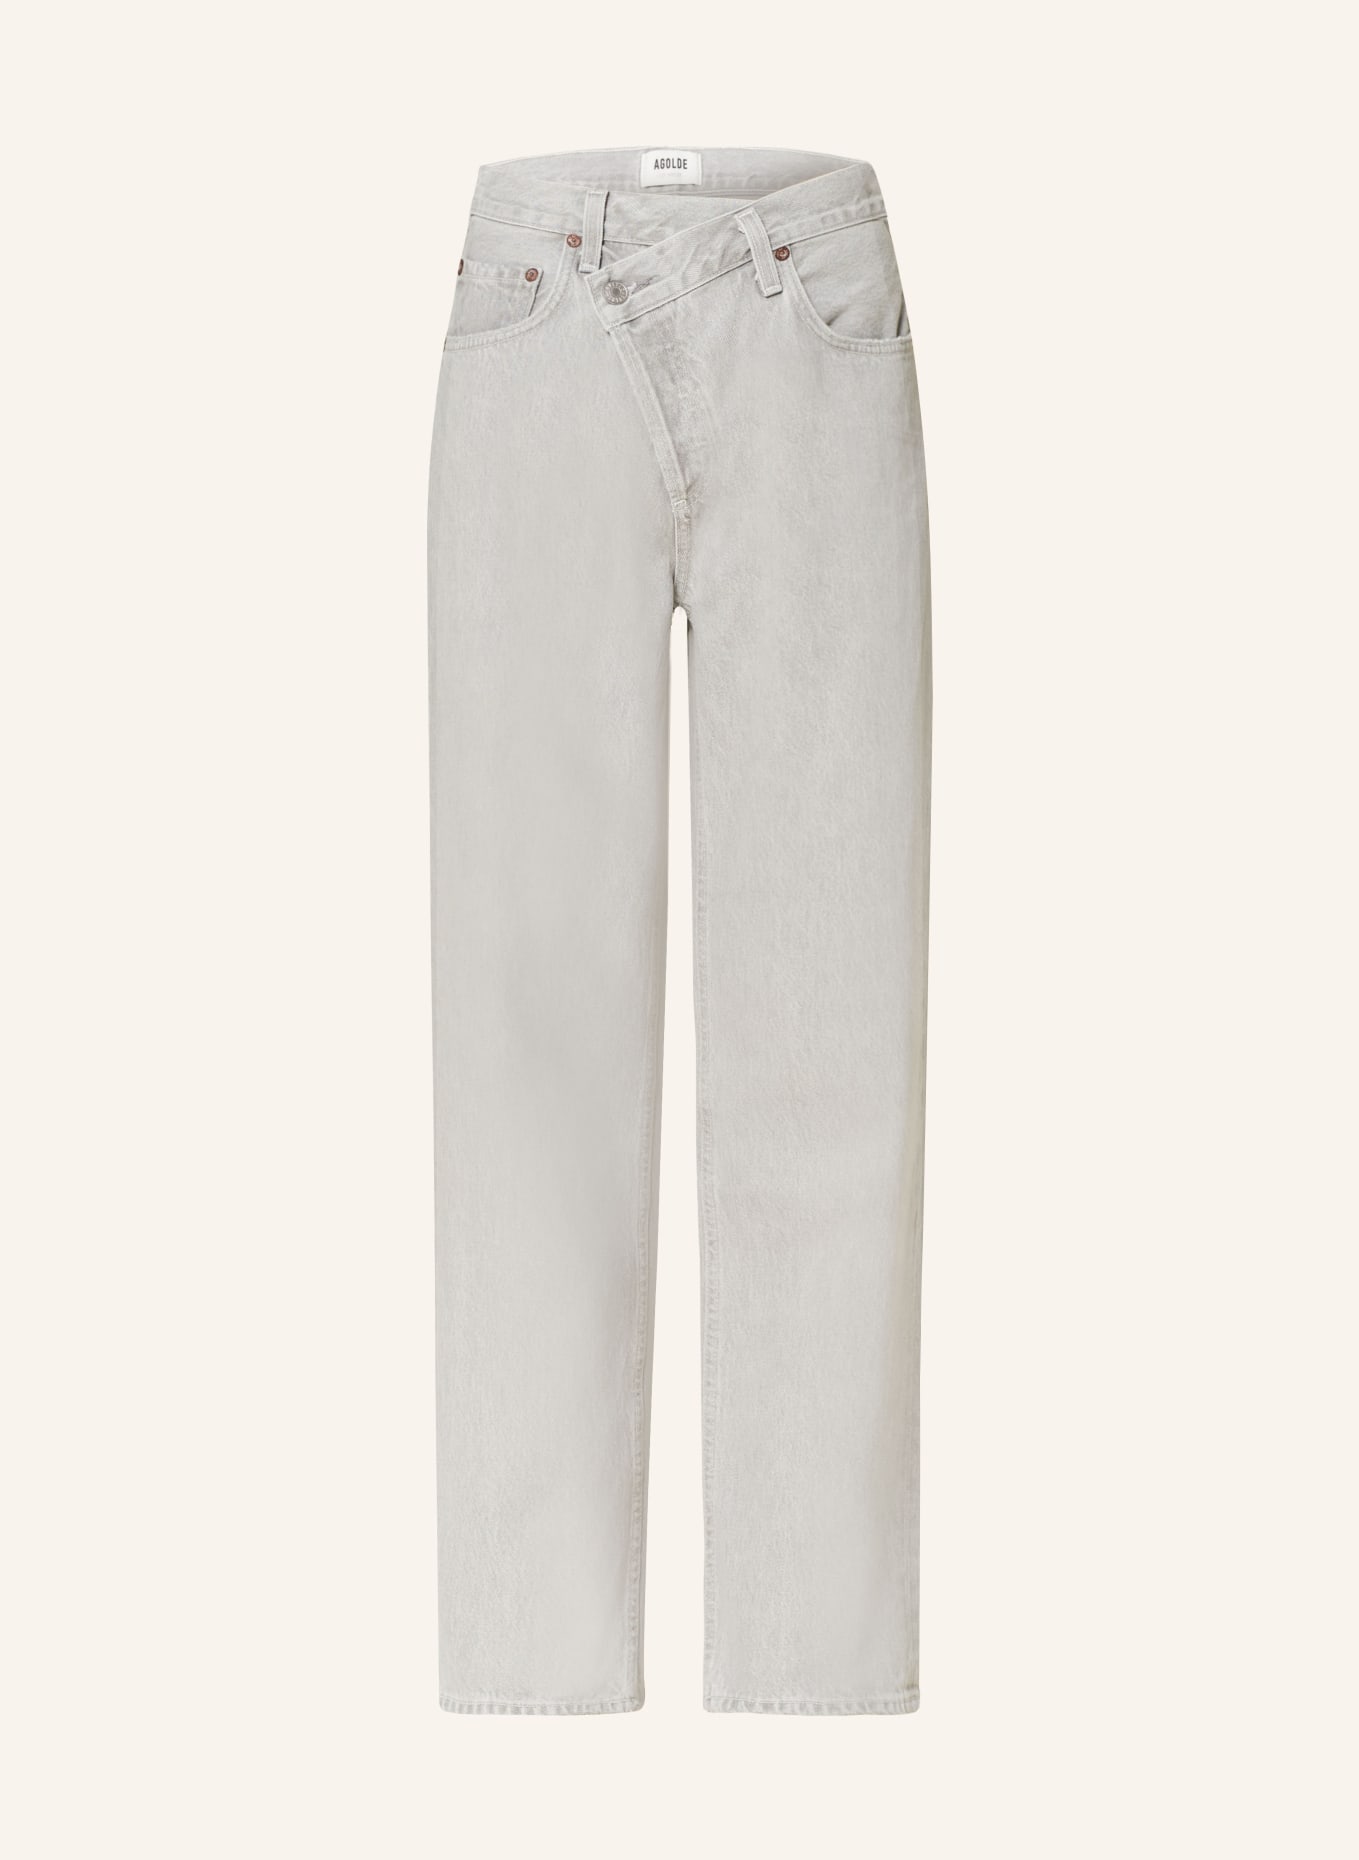 AGOLDE Straight Jeans CRISS CROSS, Farbe: rain marbled med grey (Bild 1)